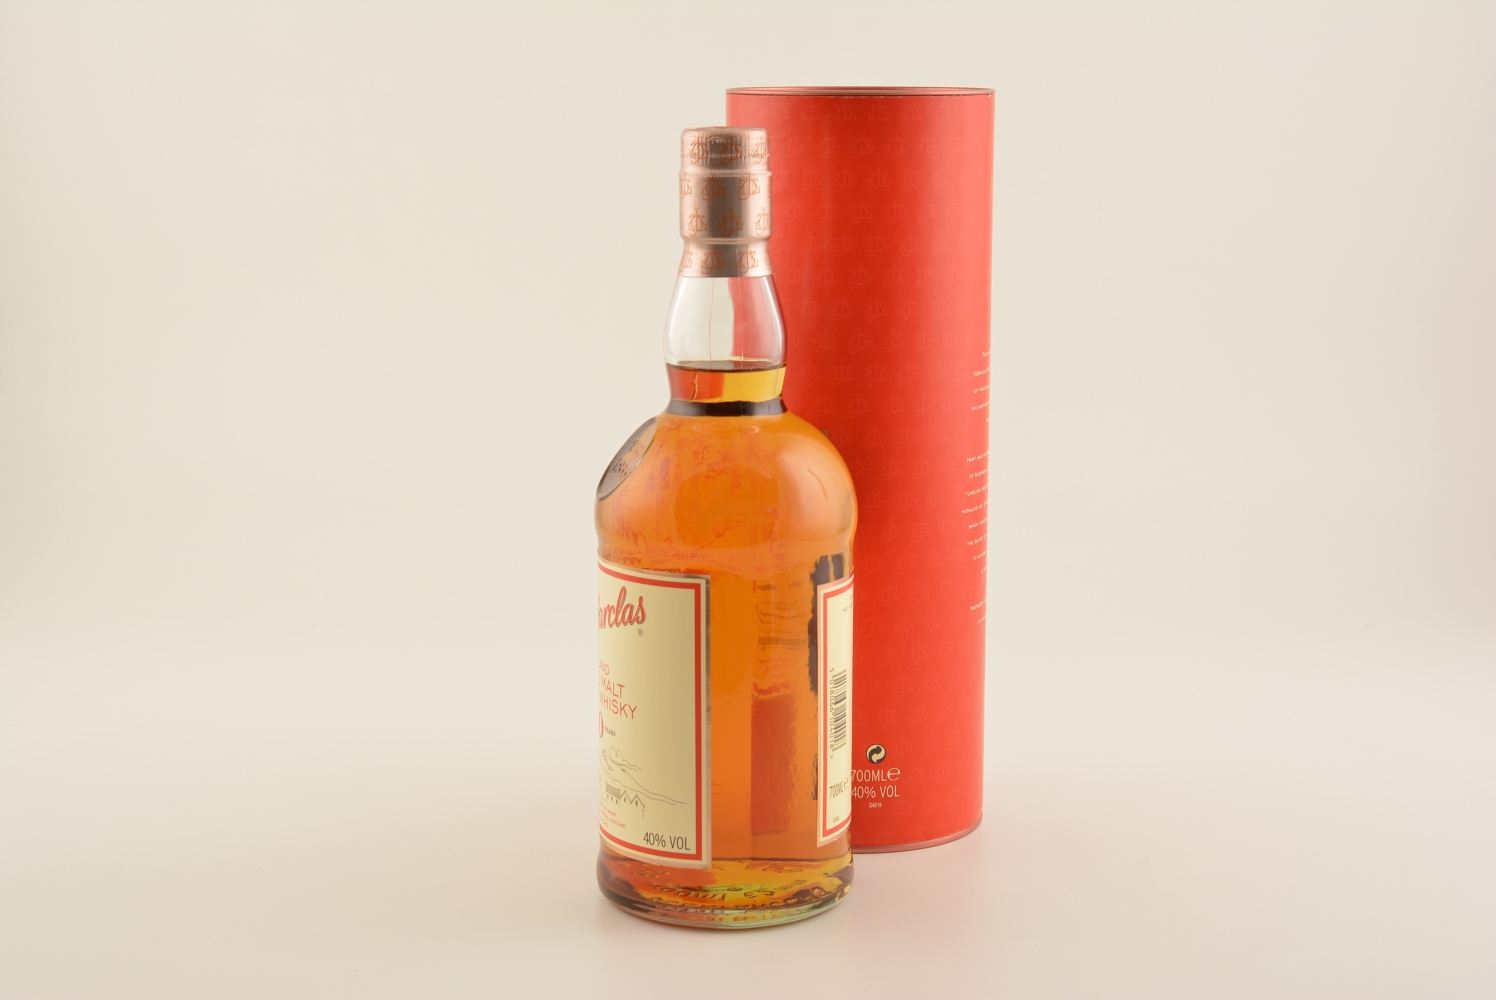 Glenfarclas 10 Jahre Whisky 40% 0,7l